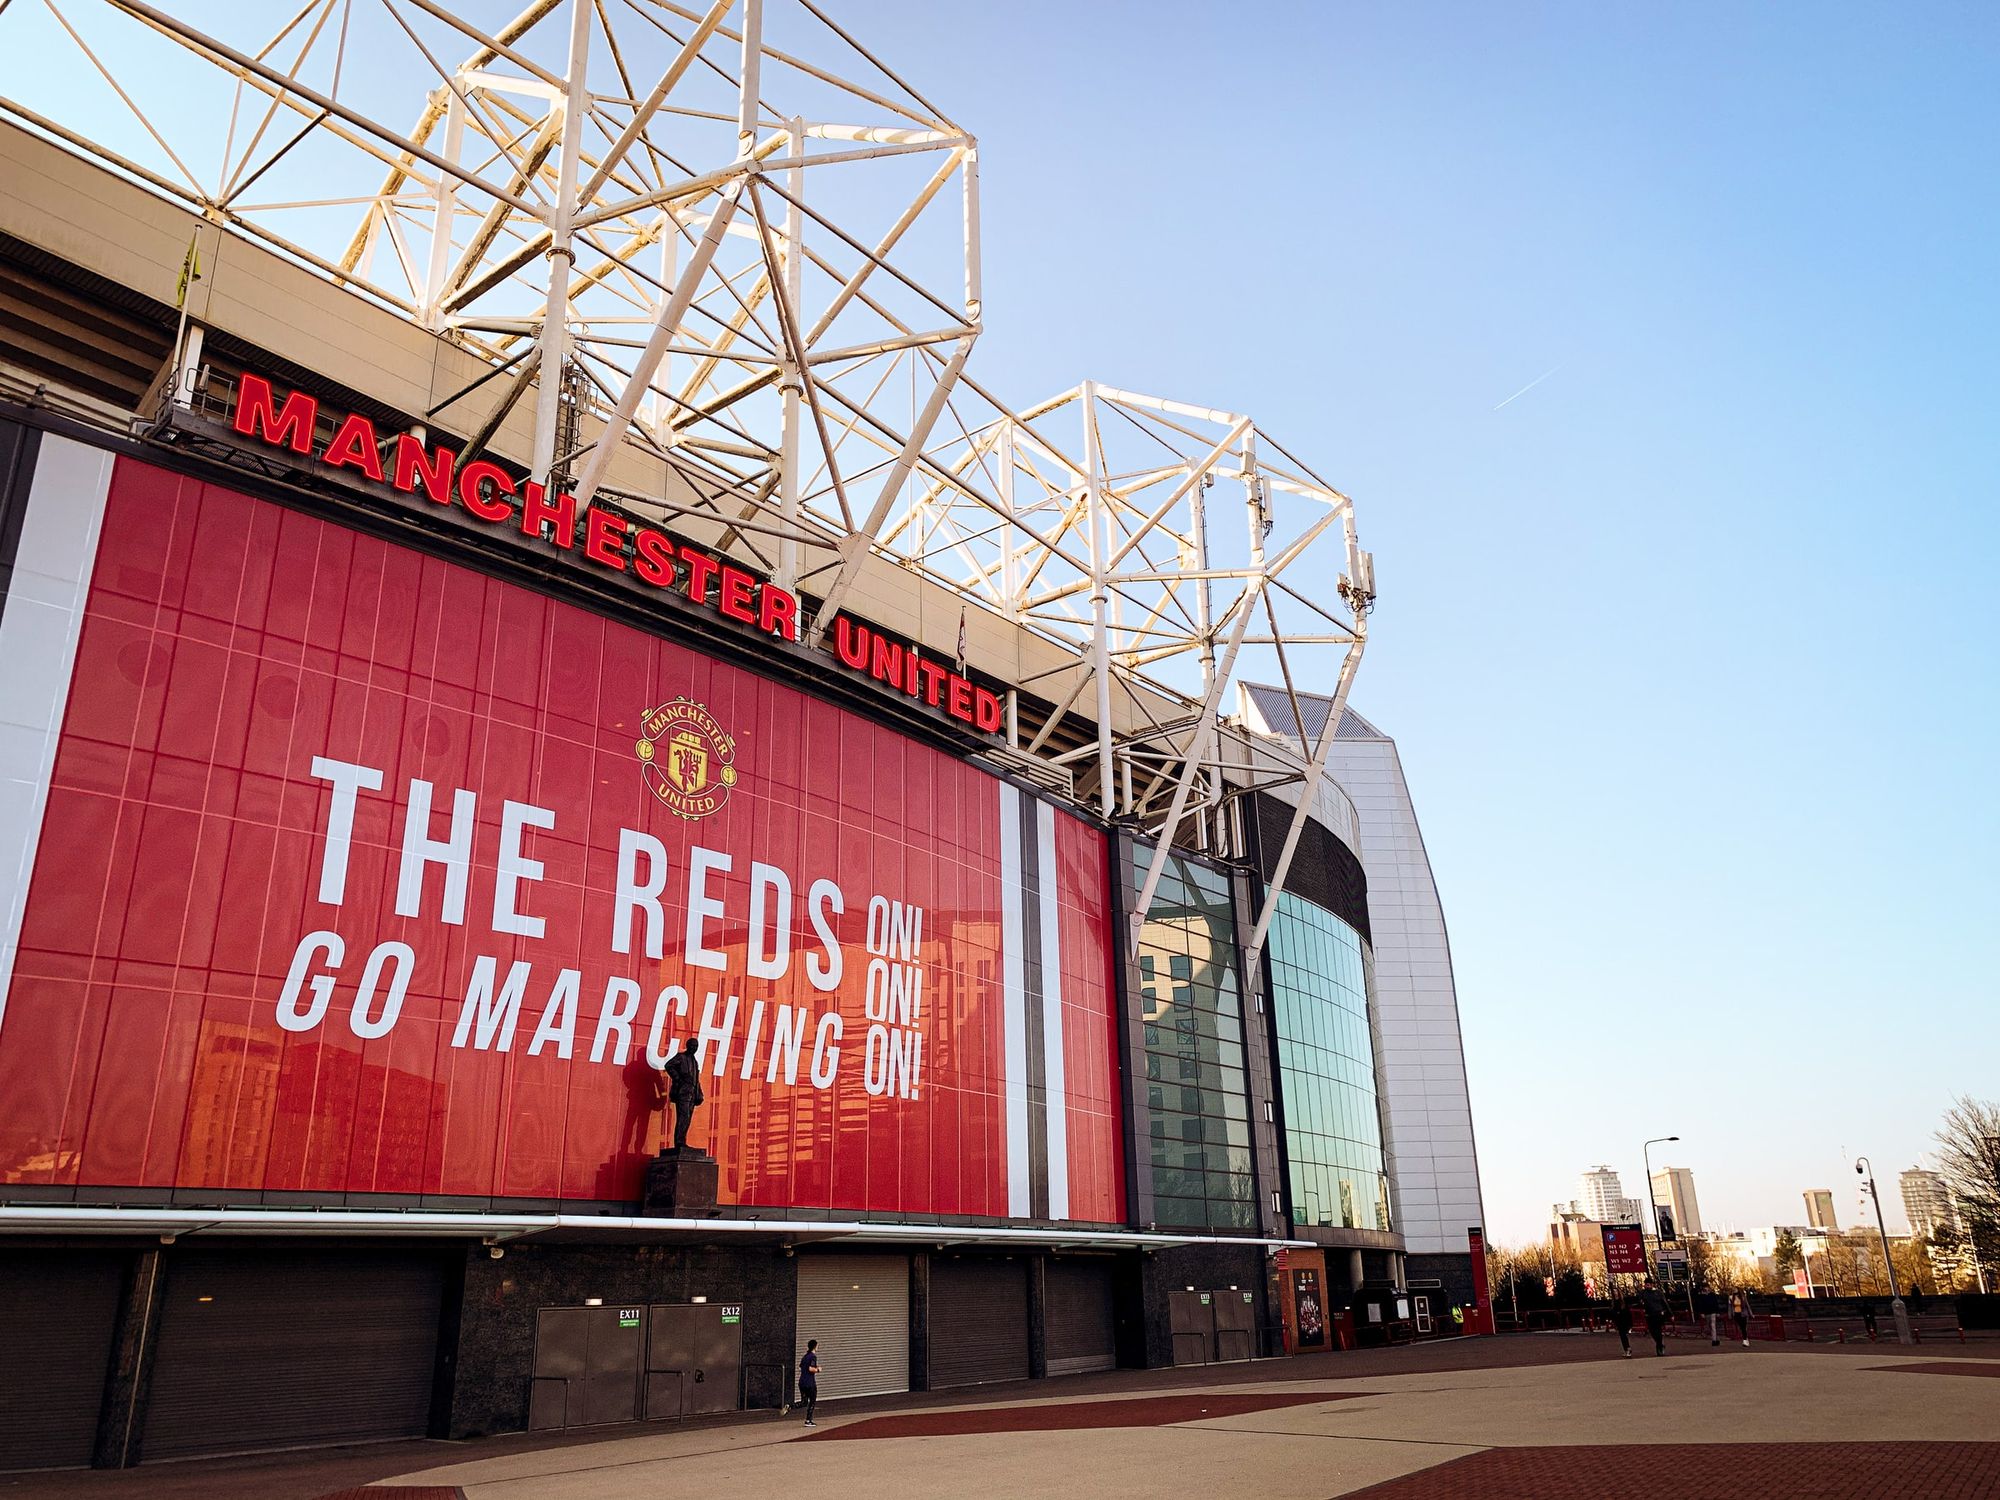 Manchester United’s Marcus Rashford makes the ‘worst Premier League XI of the season’